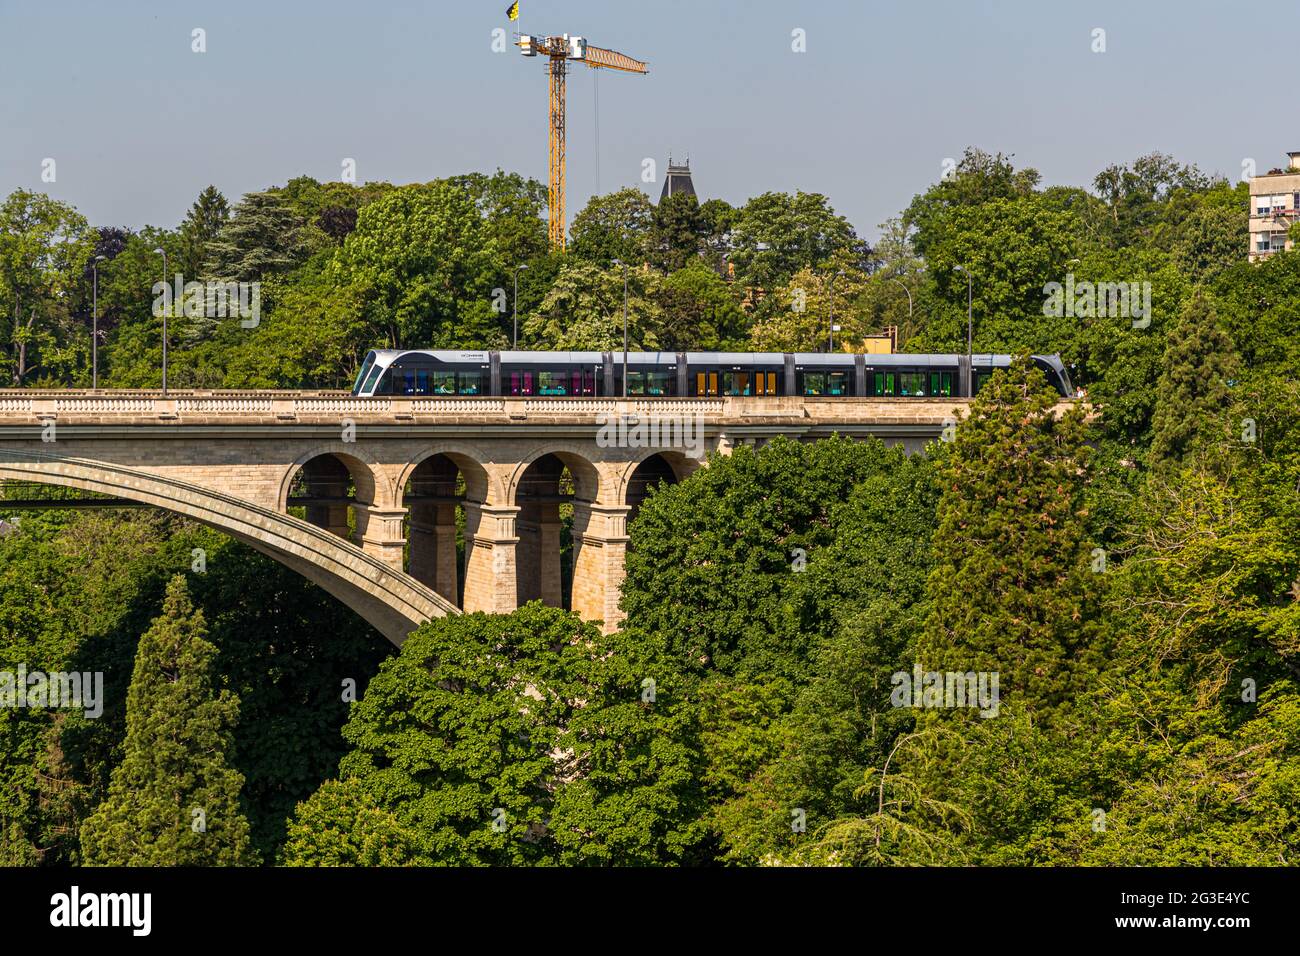 Streetcar on Adolphe bridge in Luxembourg Stock Photo